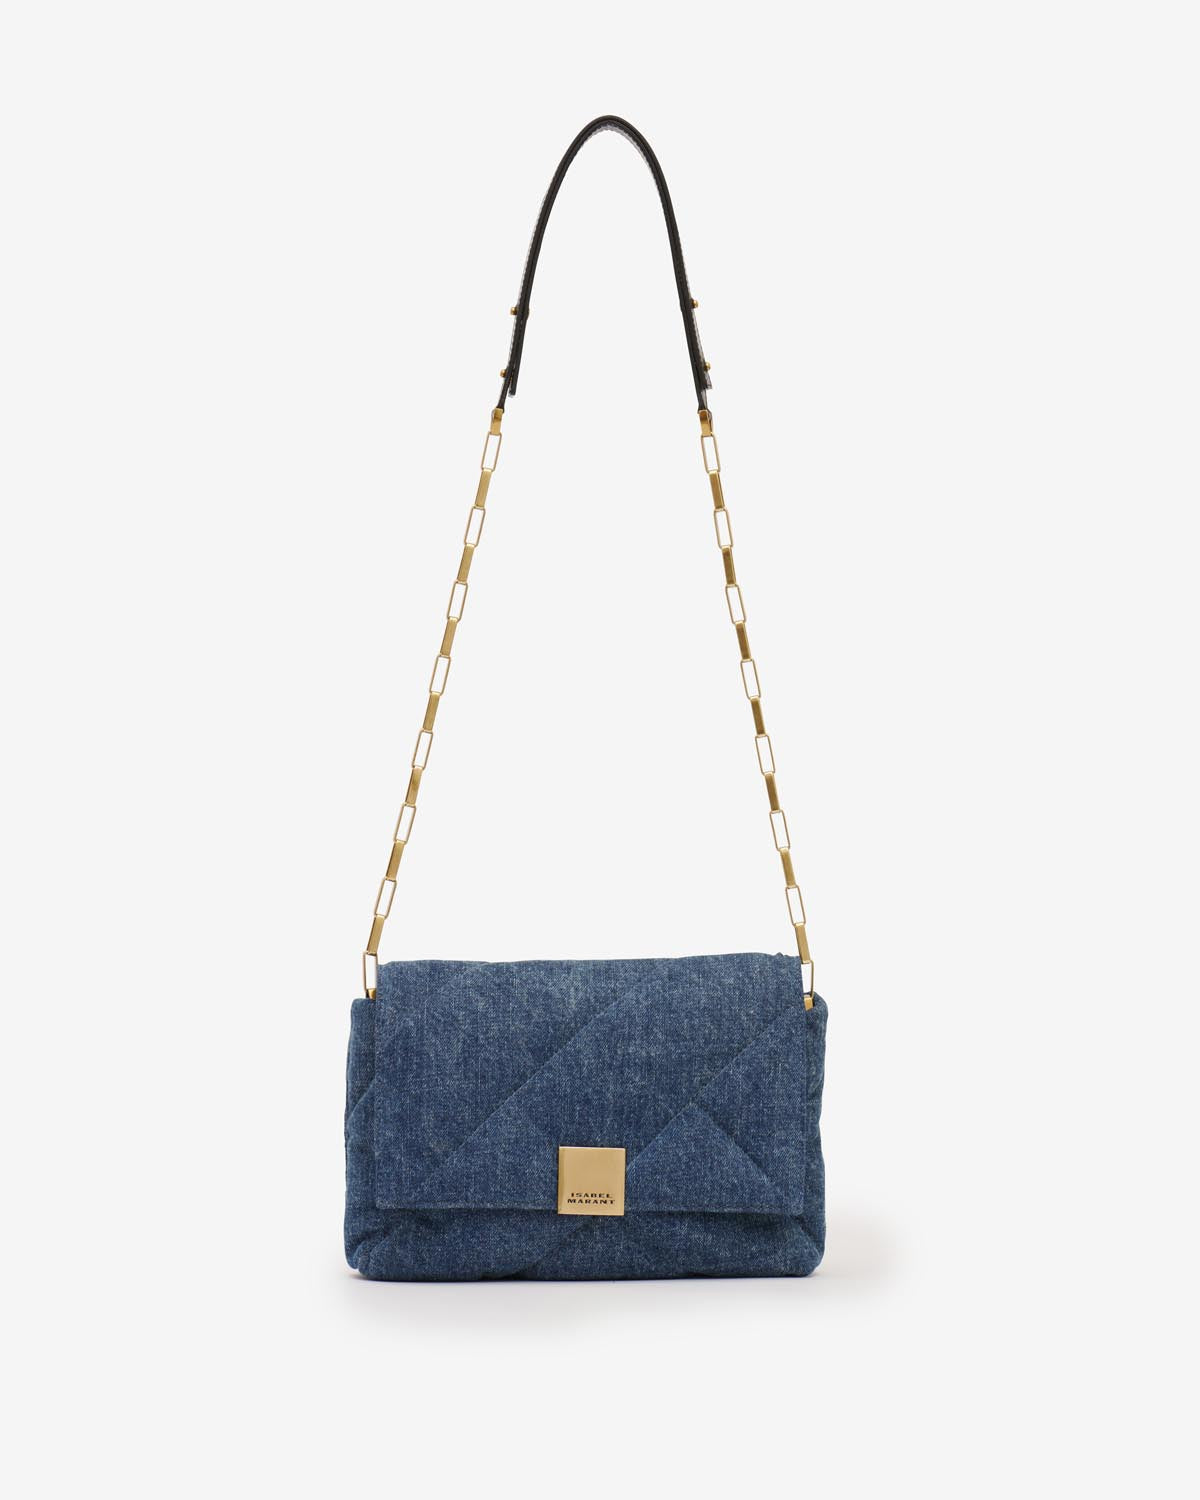 Merine puffy bag Woman Dark blue 4